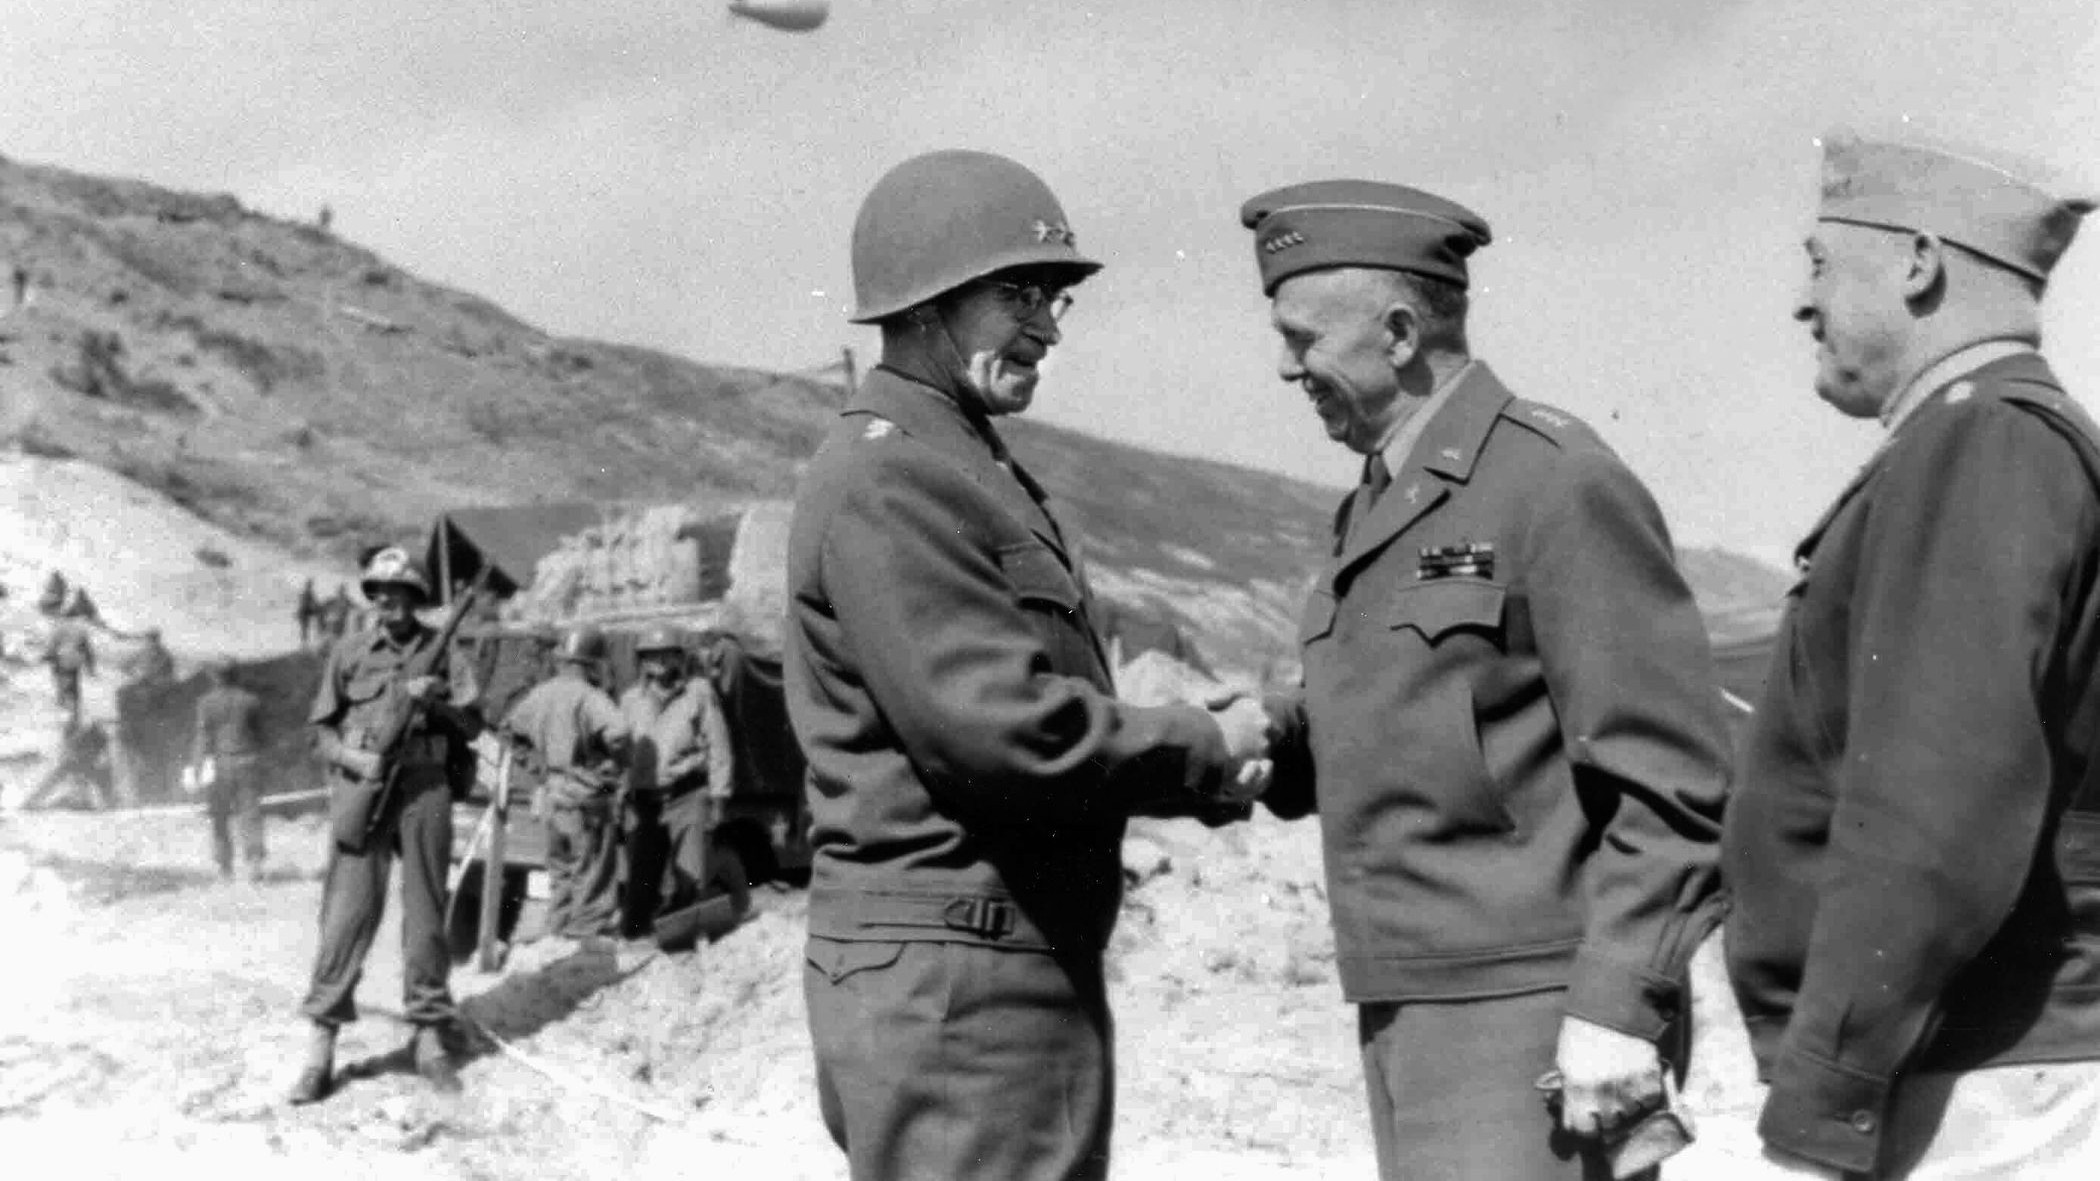 Lieutenant General Omar Bradley greets Marshall in Normandy in June 1944.